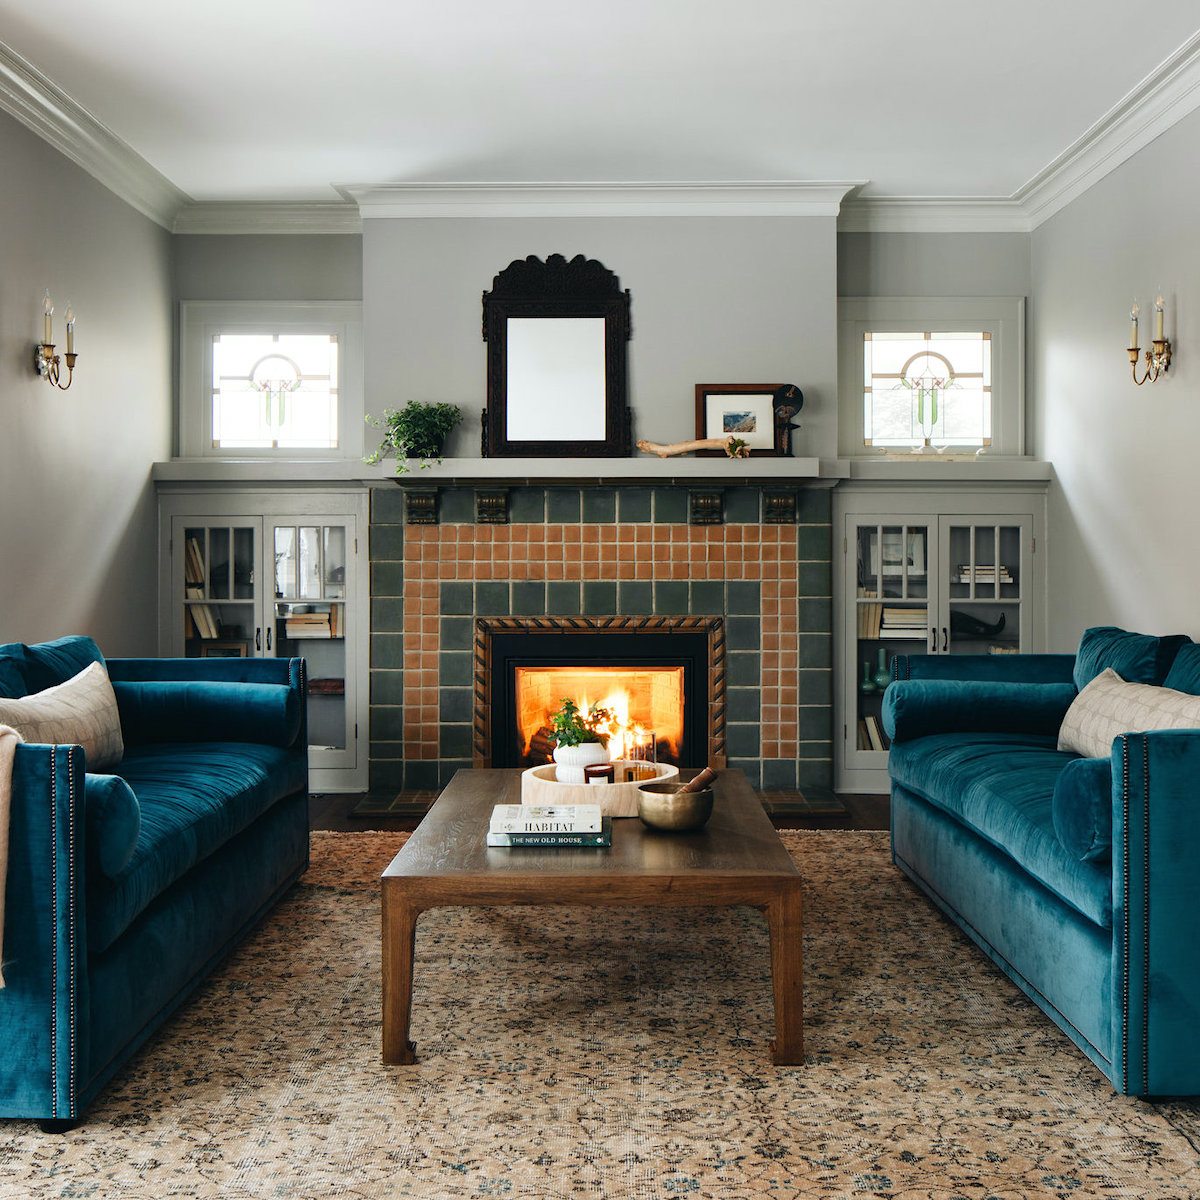 Jean Stoffer Design - mother-daughter interior designers - fabulous colors - teal sofas